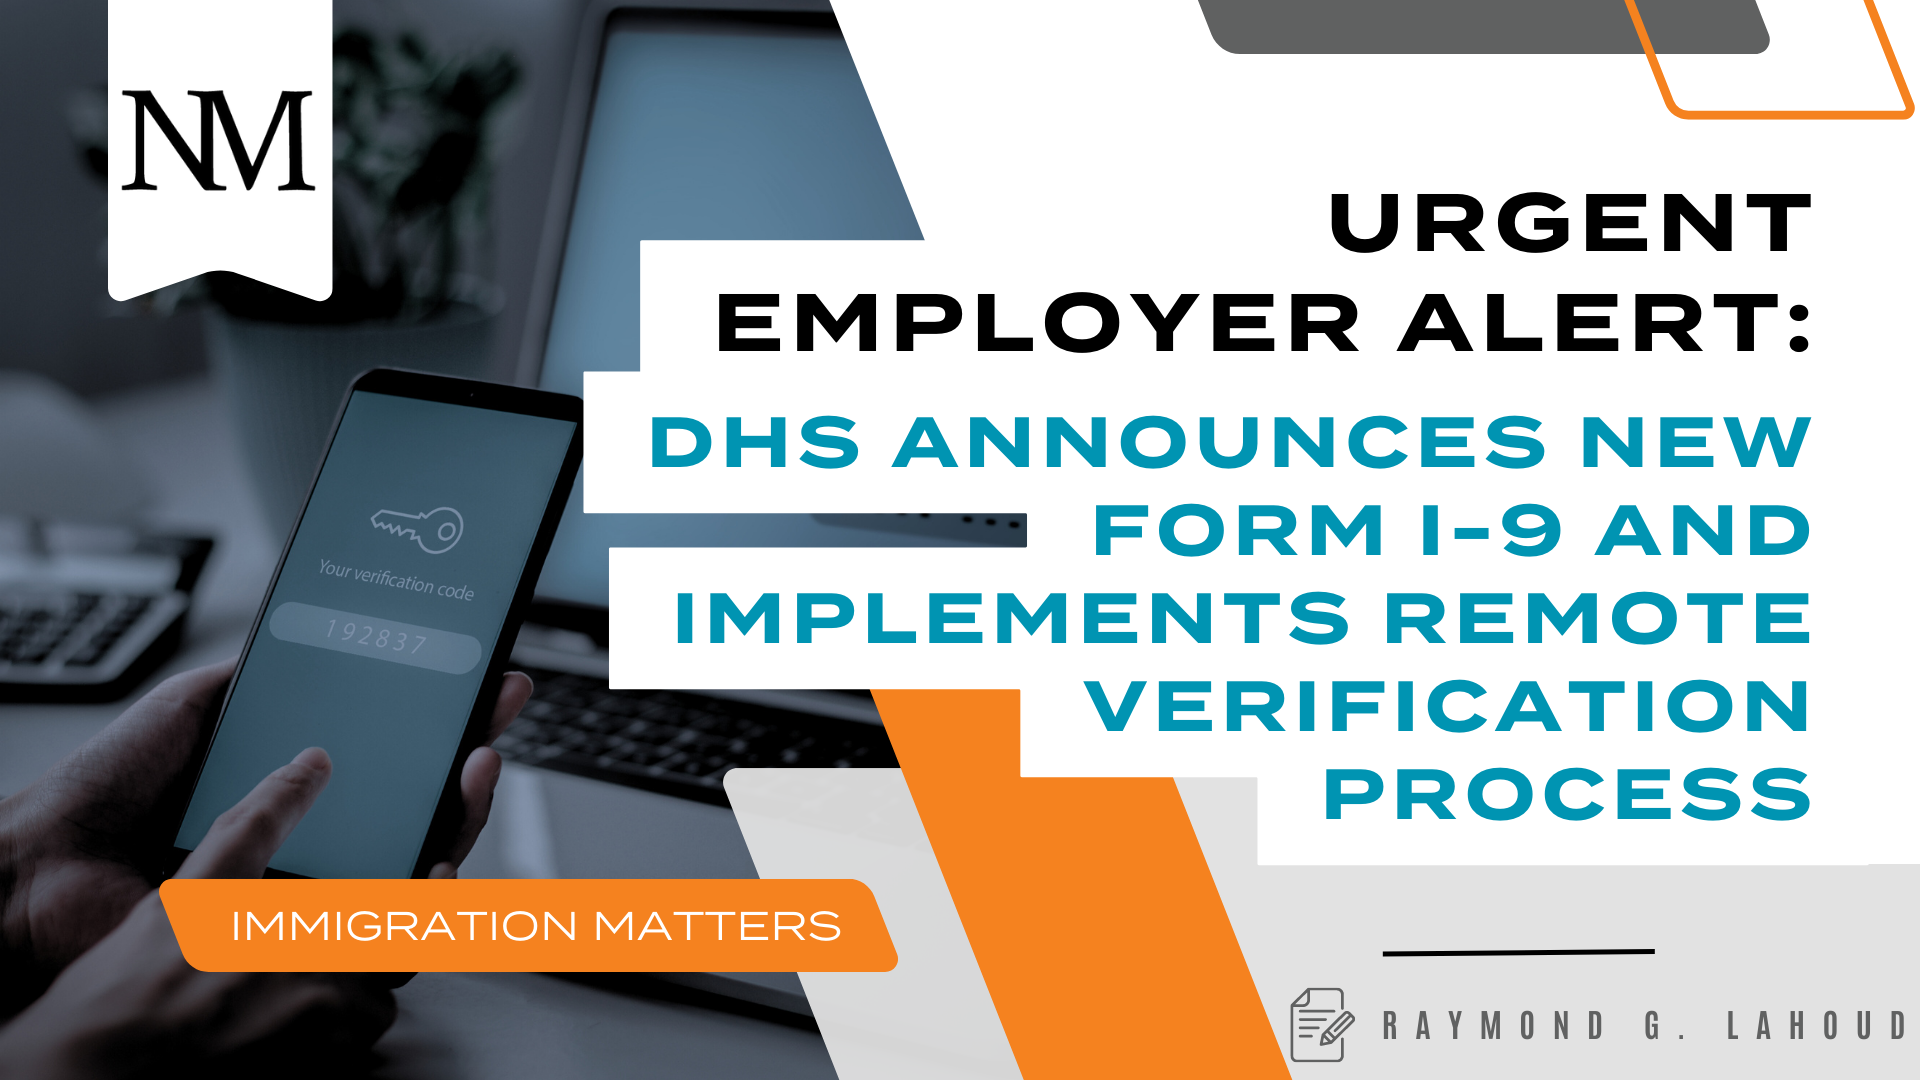 Urgent Employer Alert: DHS Announces New Form I-9 and Implements Remote Verification Process